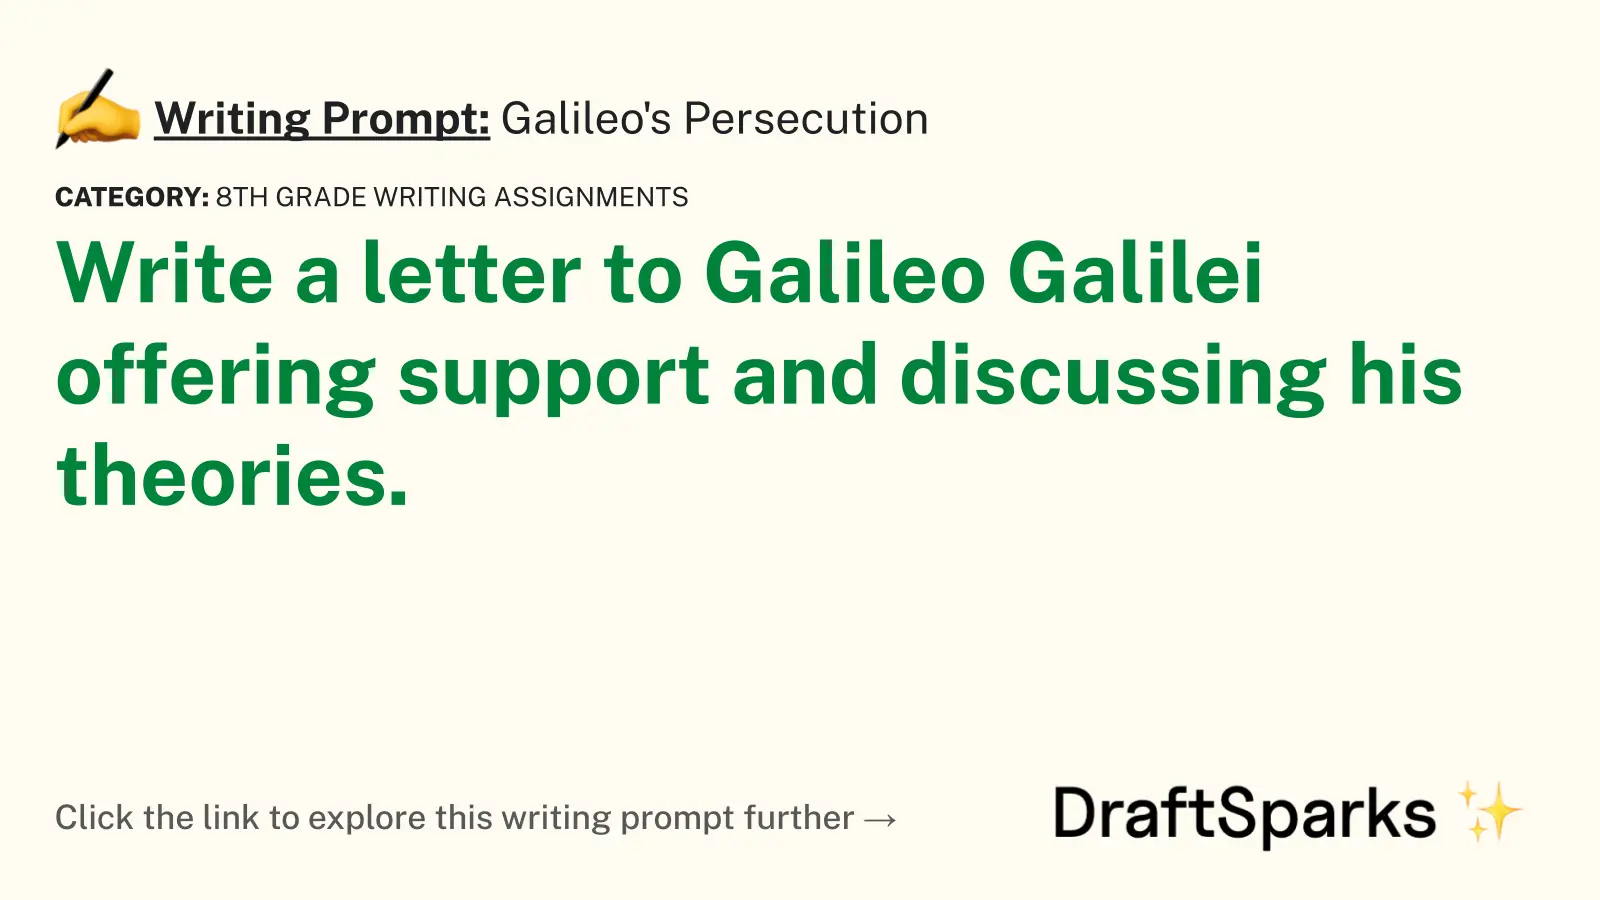 Galileo’s Persecution